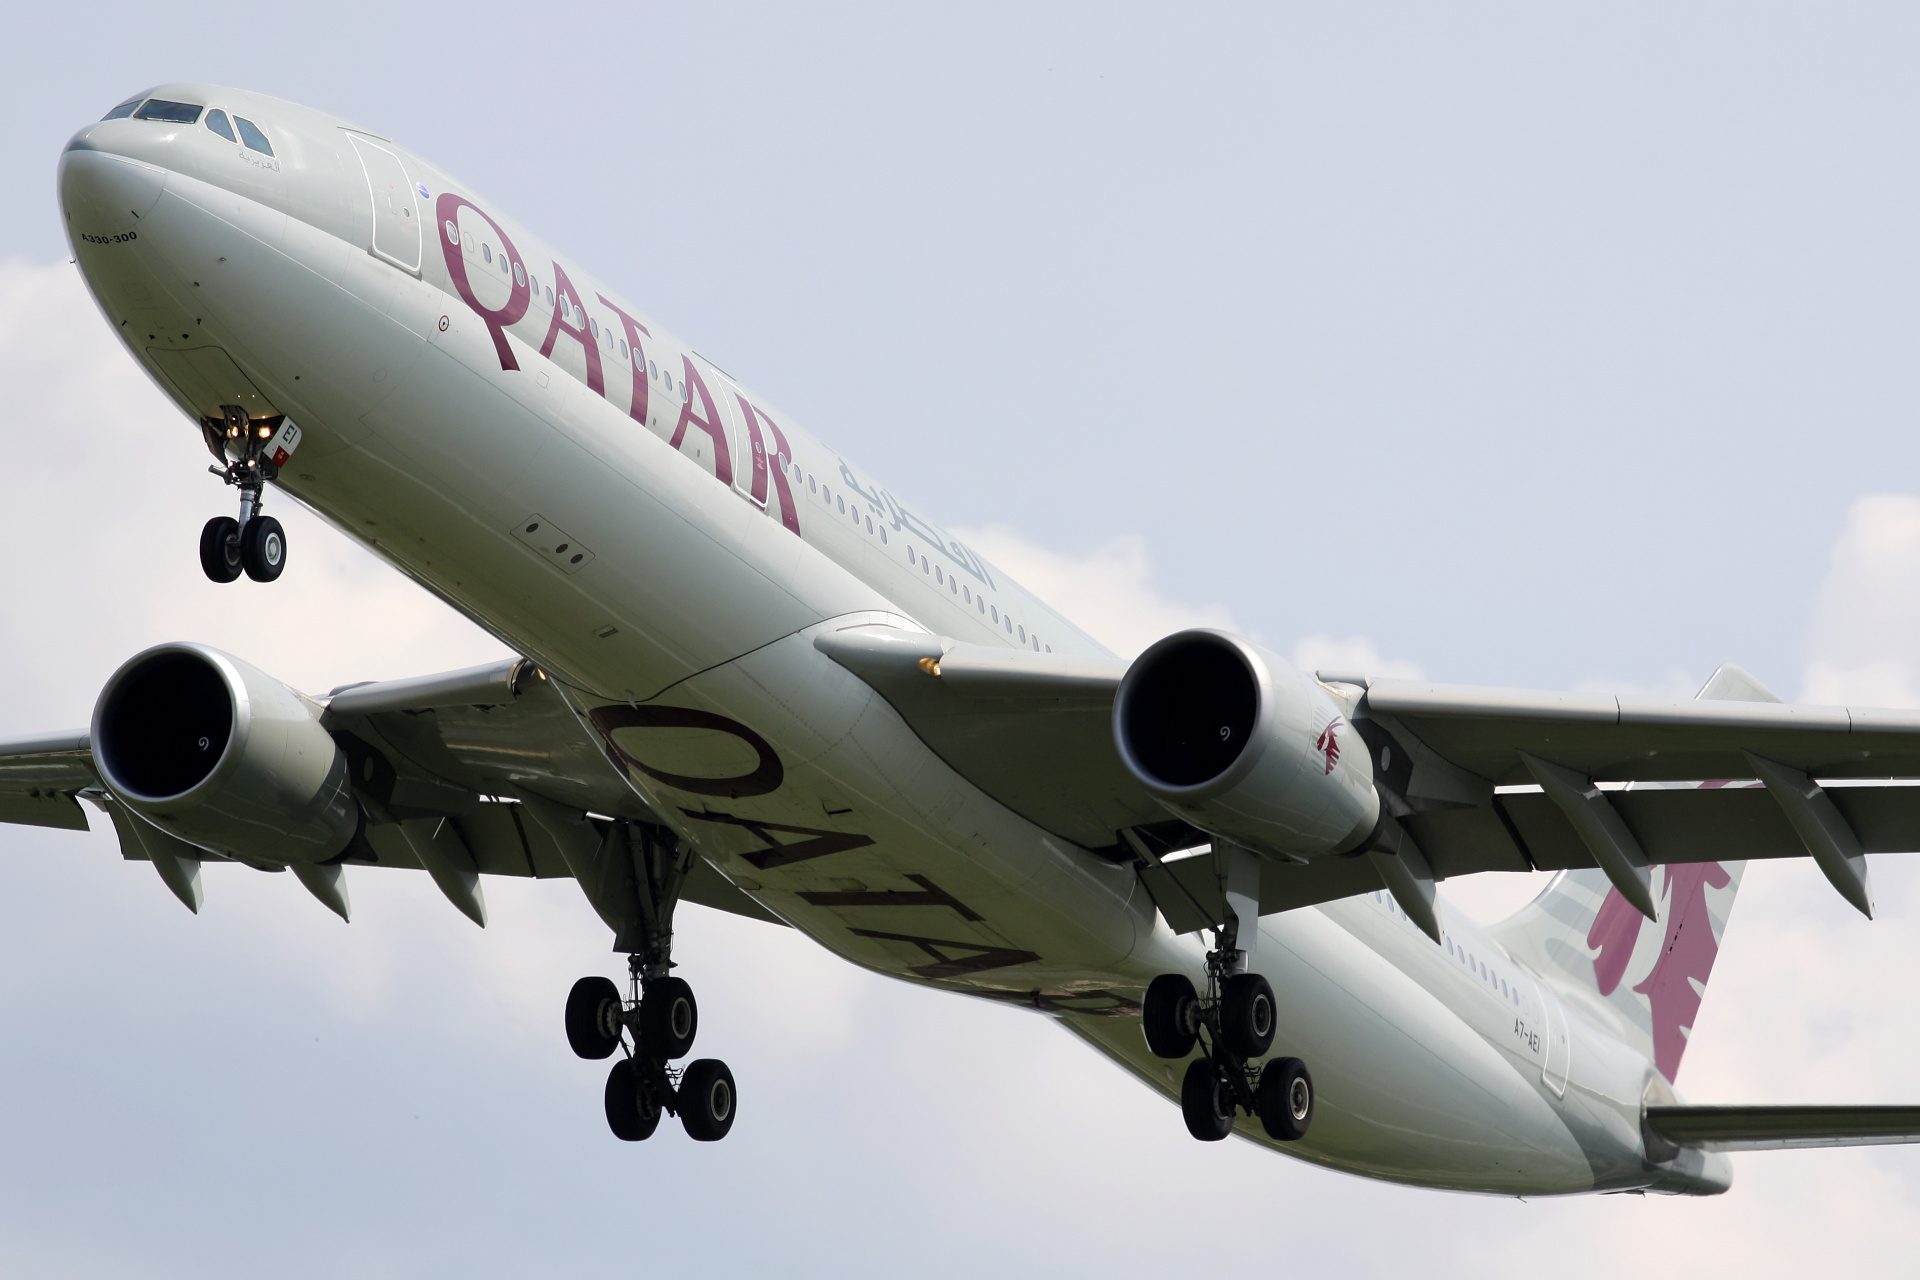 A7-AEI (Aircraft » EPWA Spotting » Airbus A330-300 » Qatar Airways)